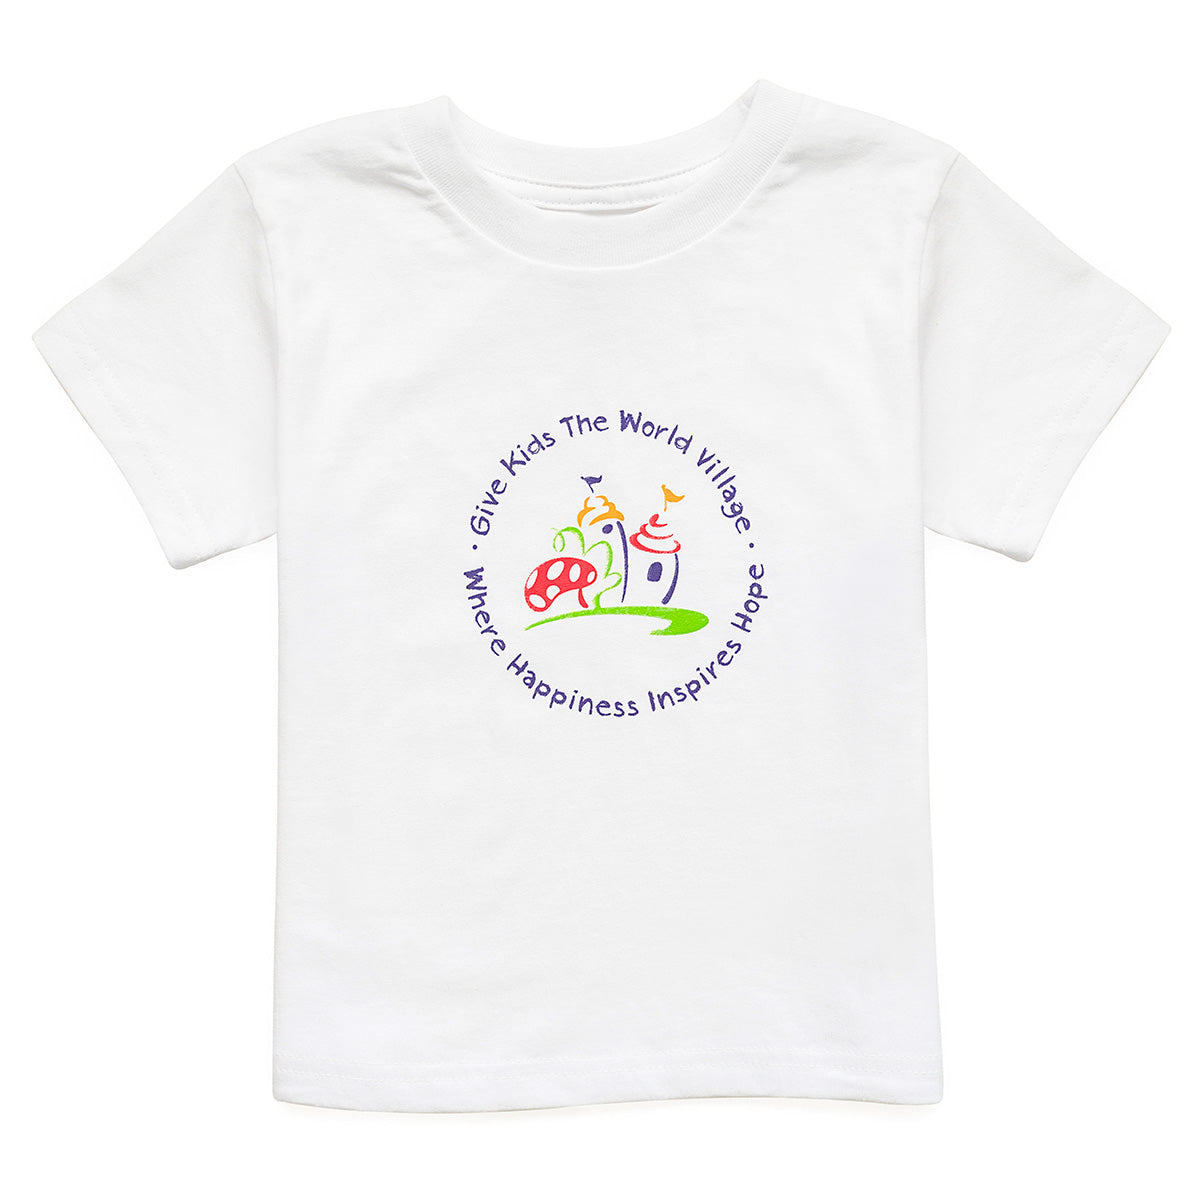 Toddler/Kids Village Kids World\'s – Memory T-Shirt The Market Logo Give